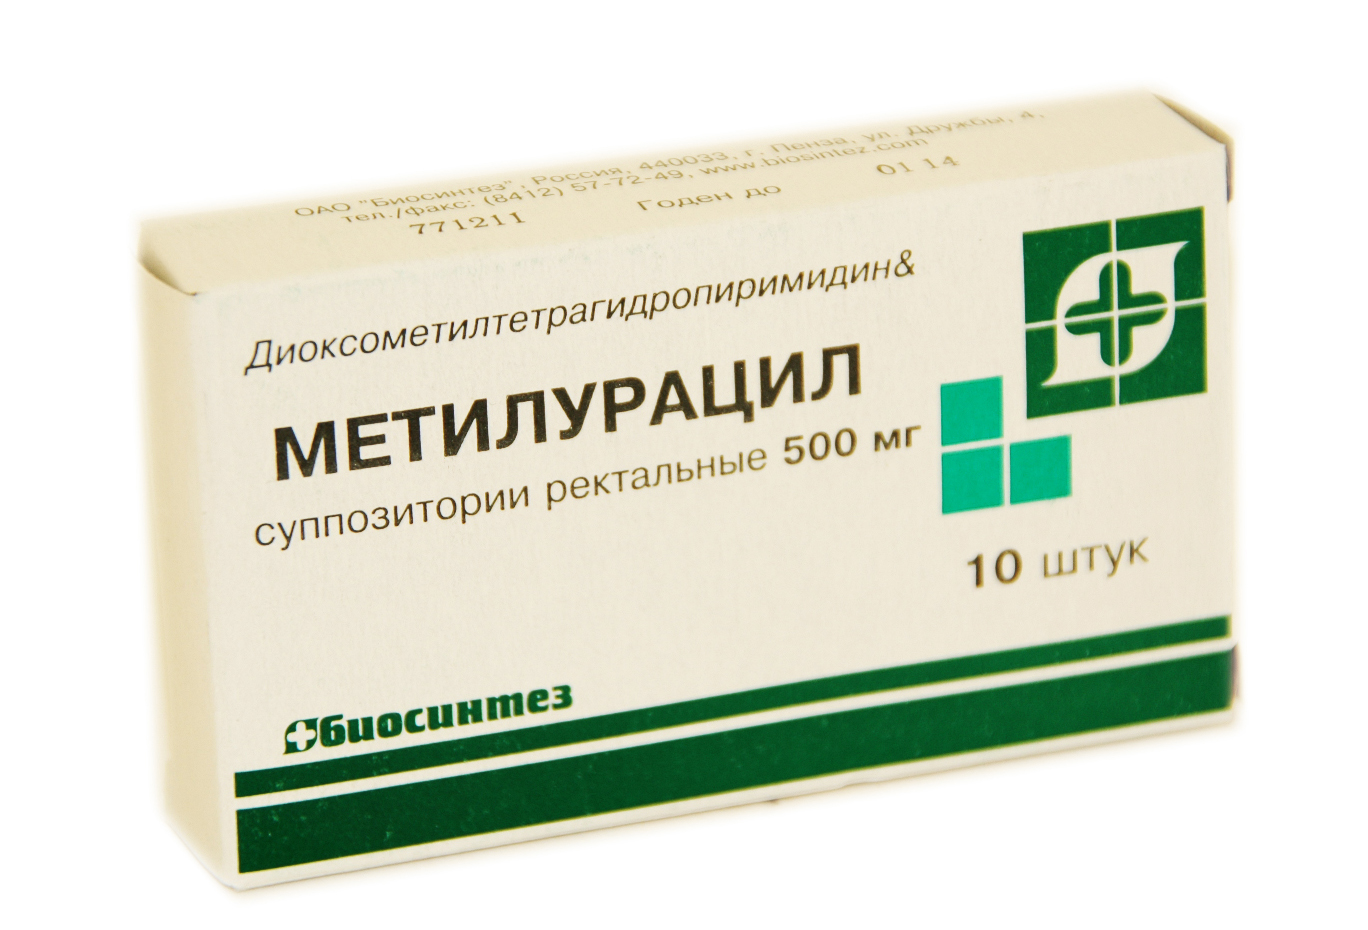 Methyluracil - synthetic derivative a pyrimidine